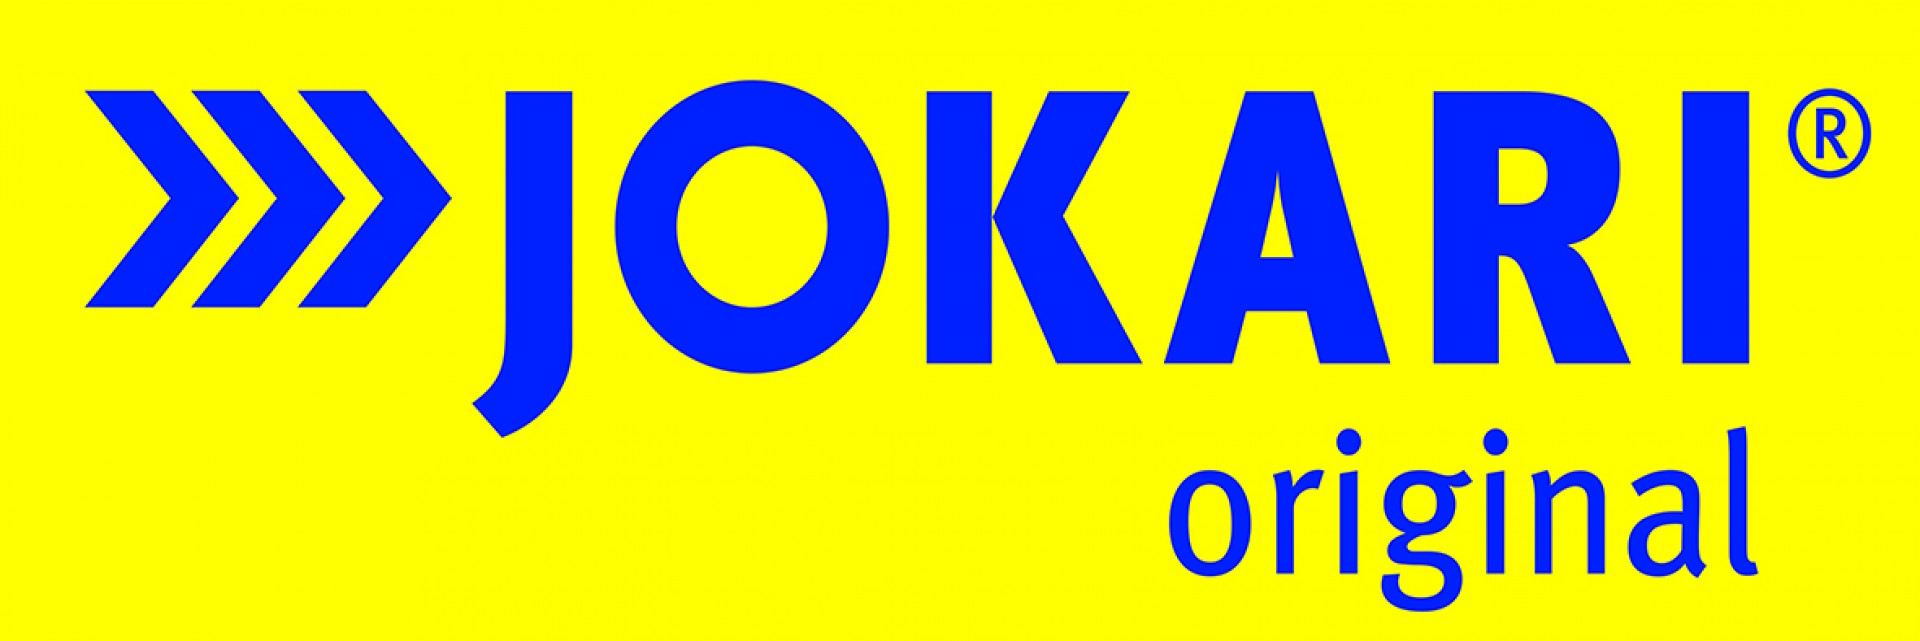 Logo Jokari